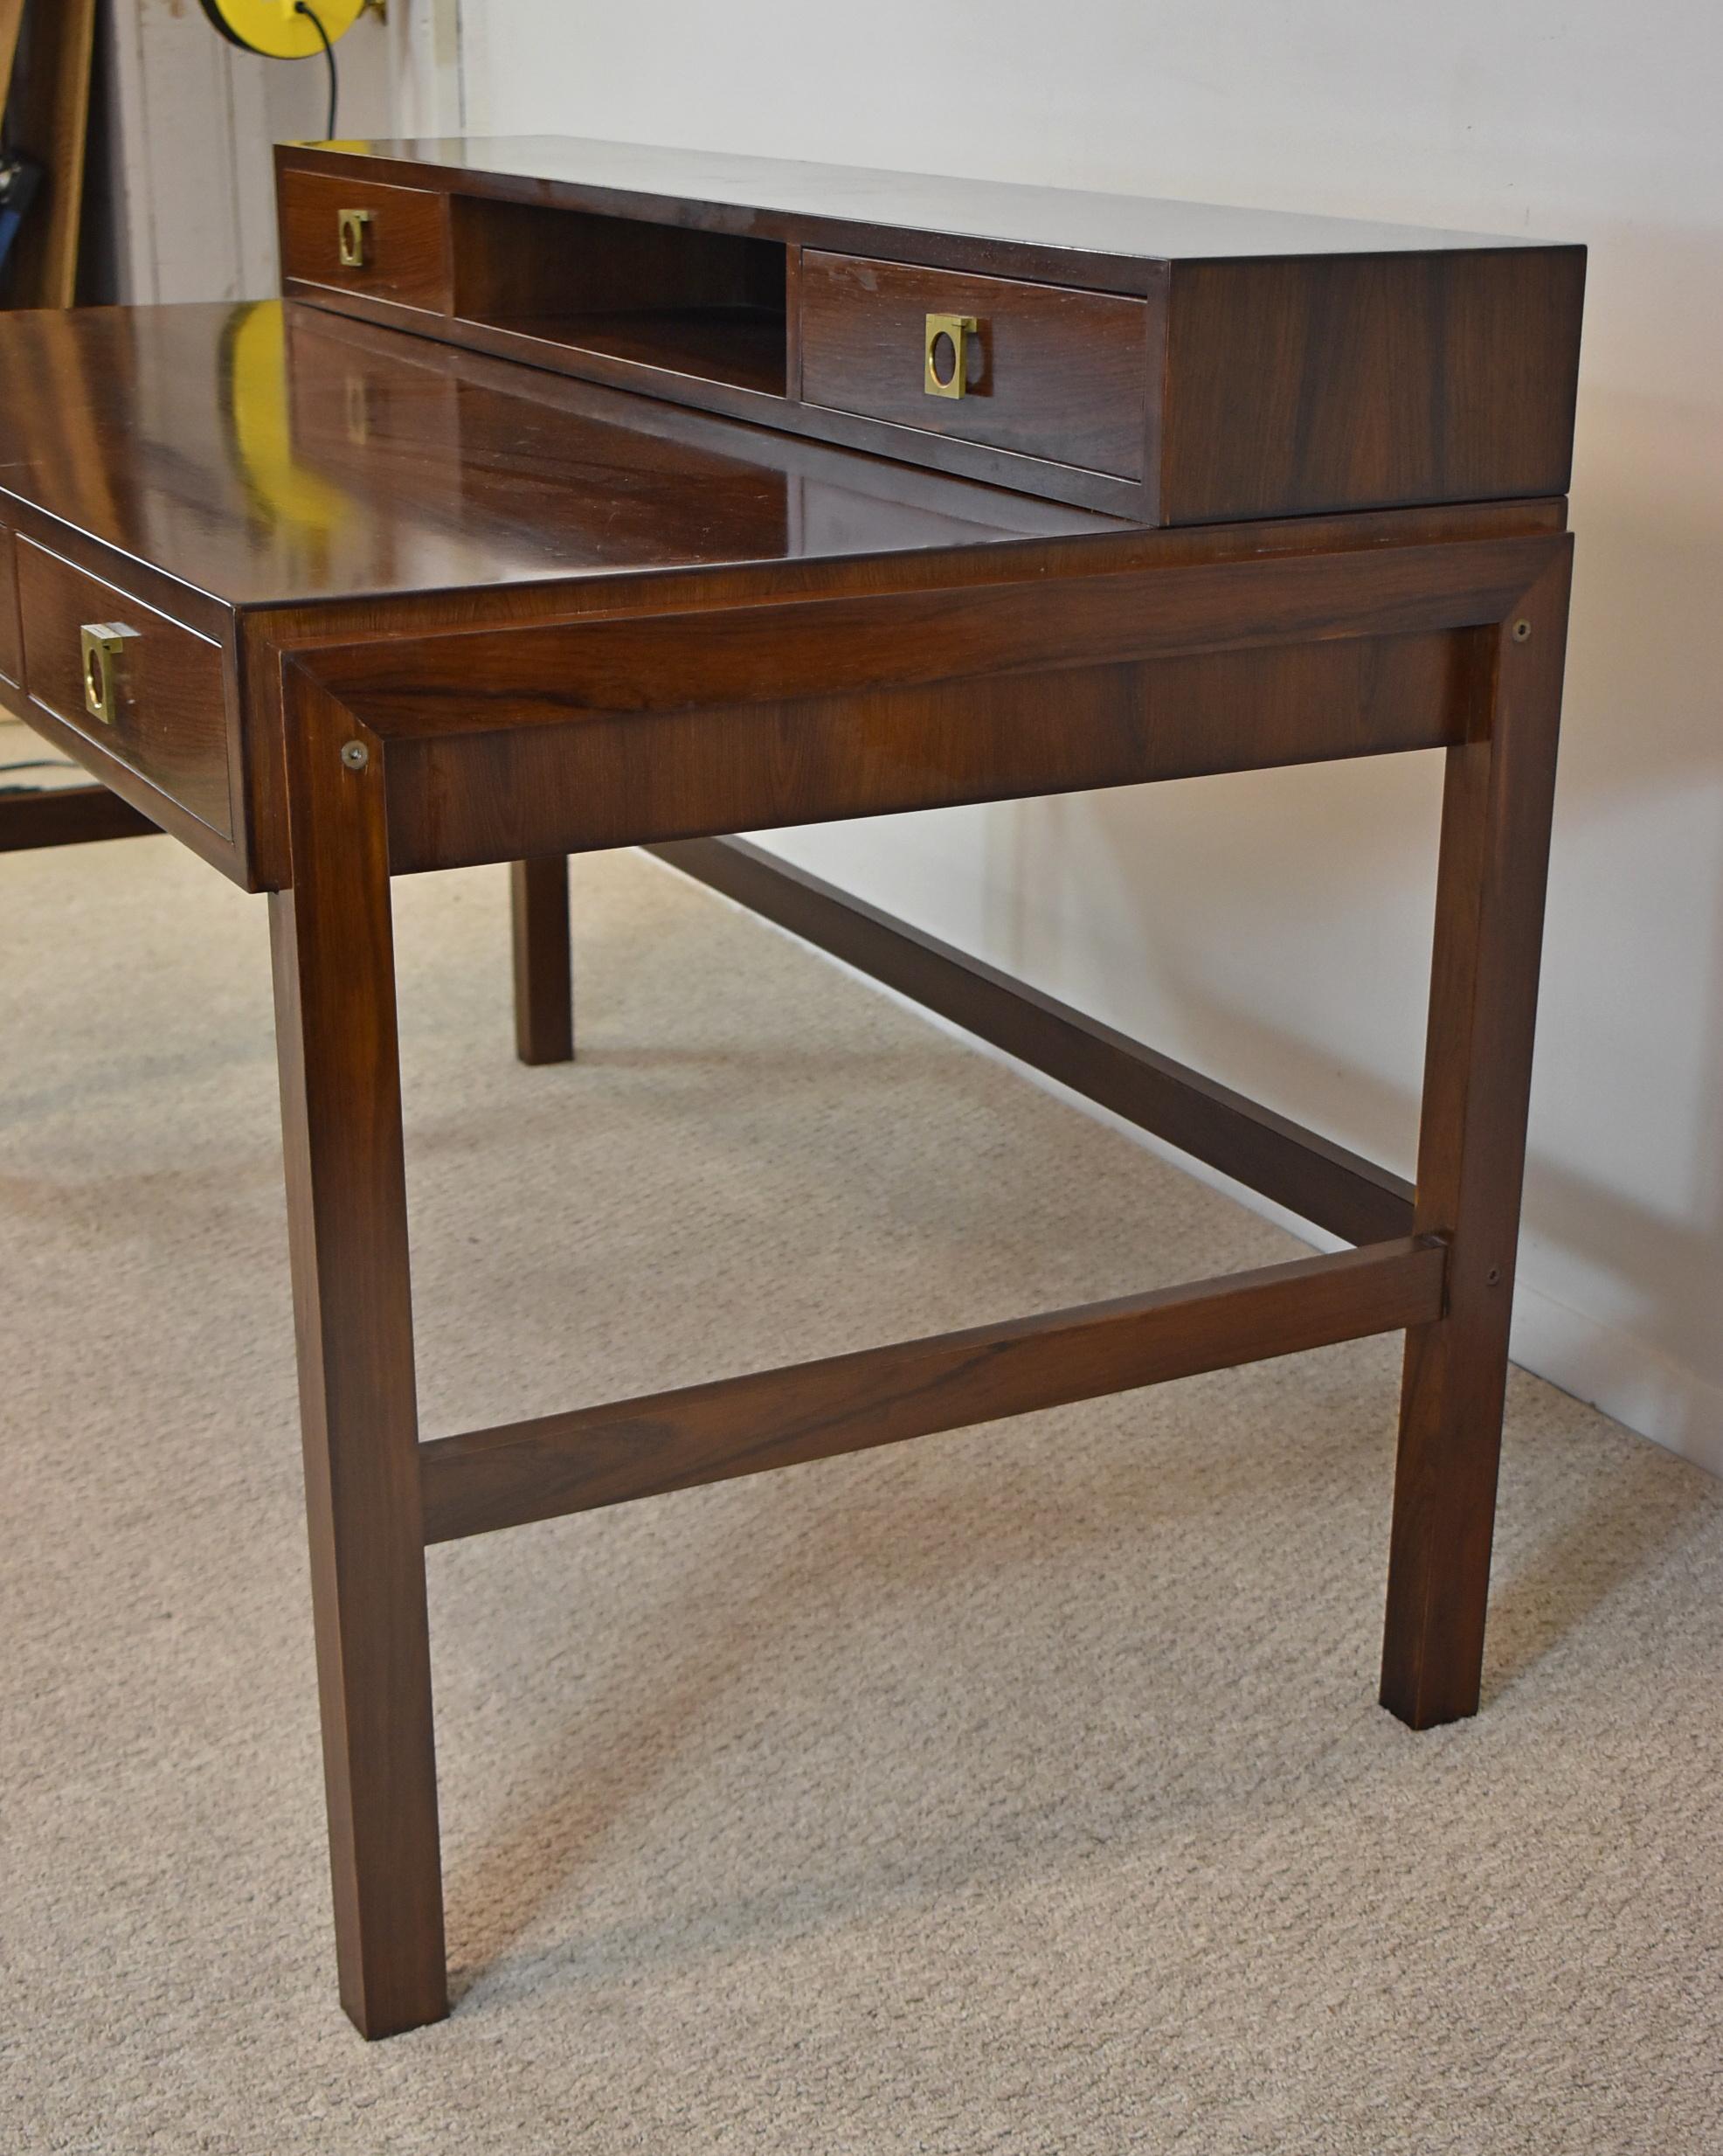 Arne Vodder Rosewood Desk In Good Condition For Sale In Toledo, OH